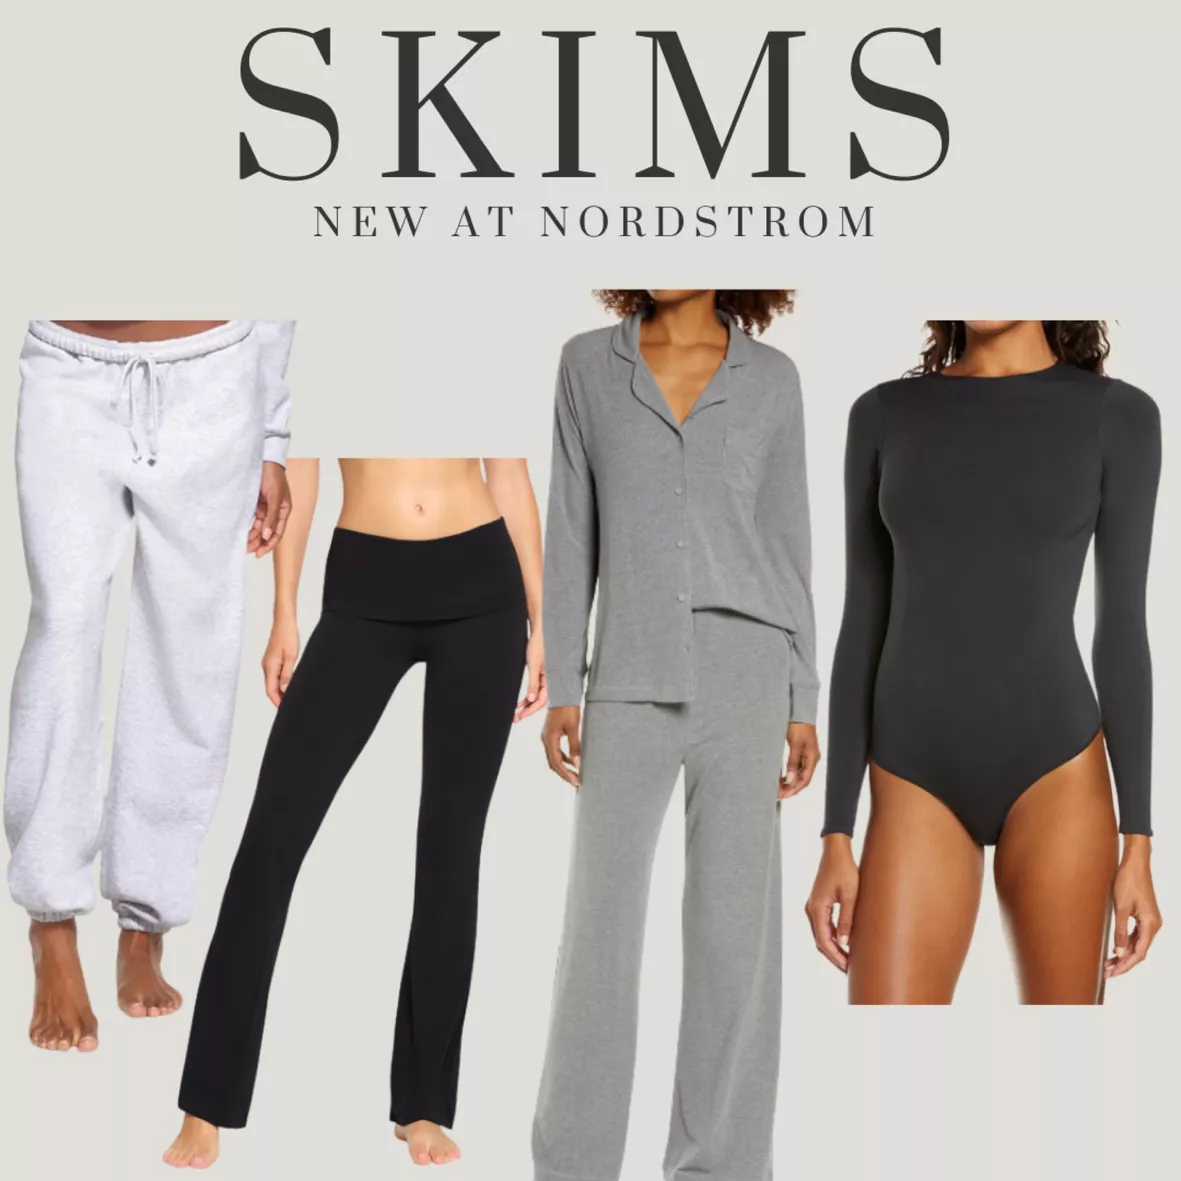 let's style this @skims outdoor bodysuit together 🤎 #skims #grwm